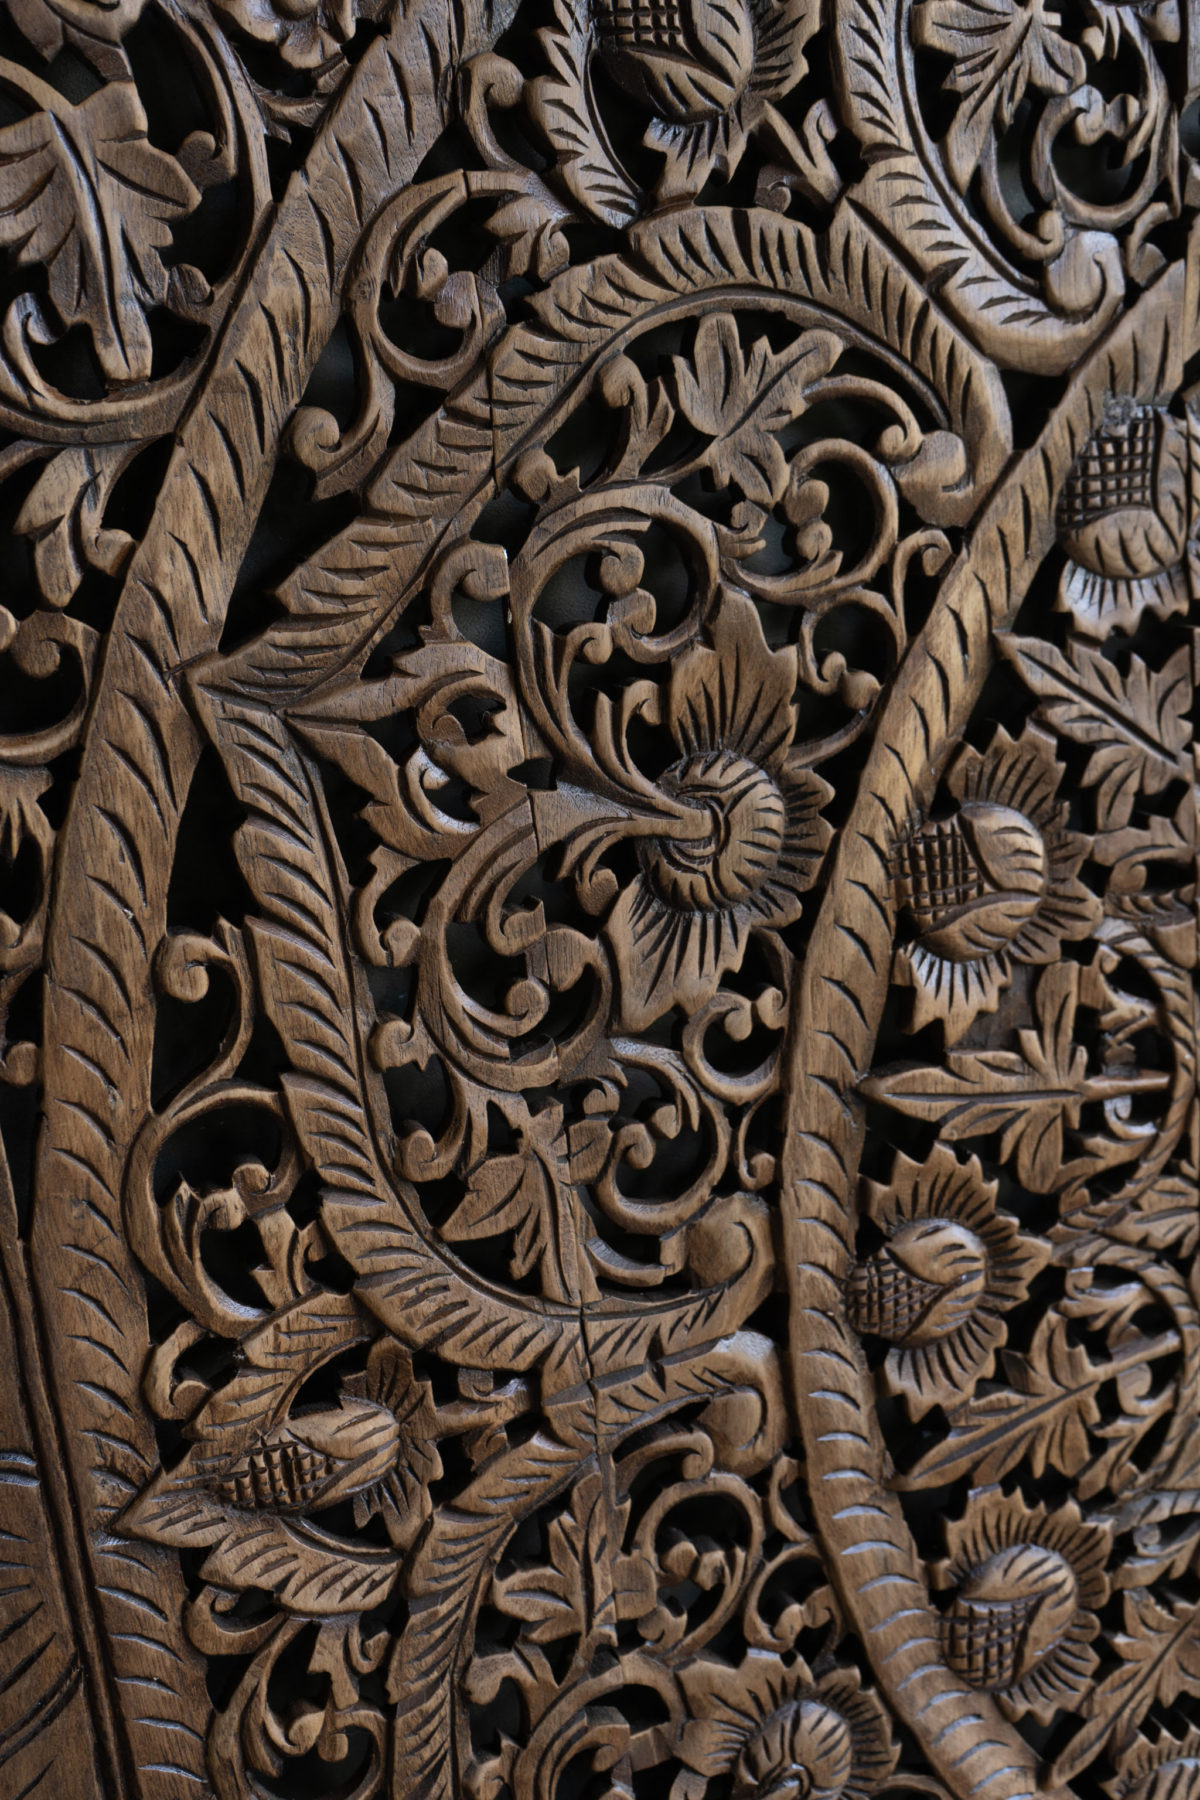 Weathered brown wood carving